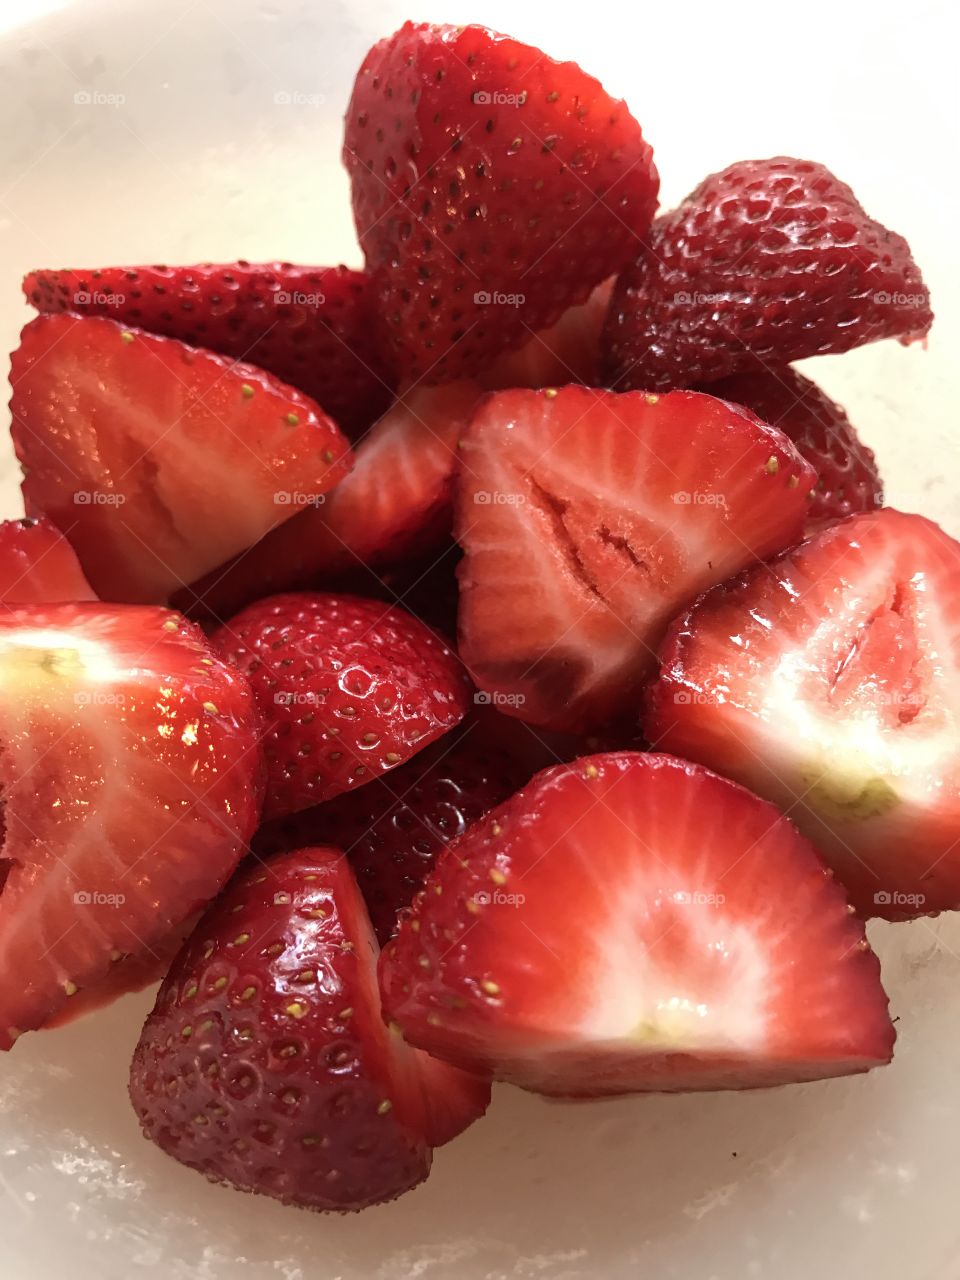 Summer strawberries!